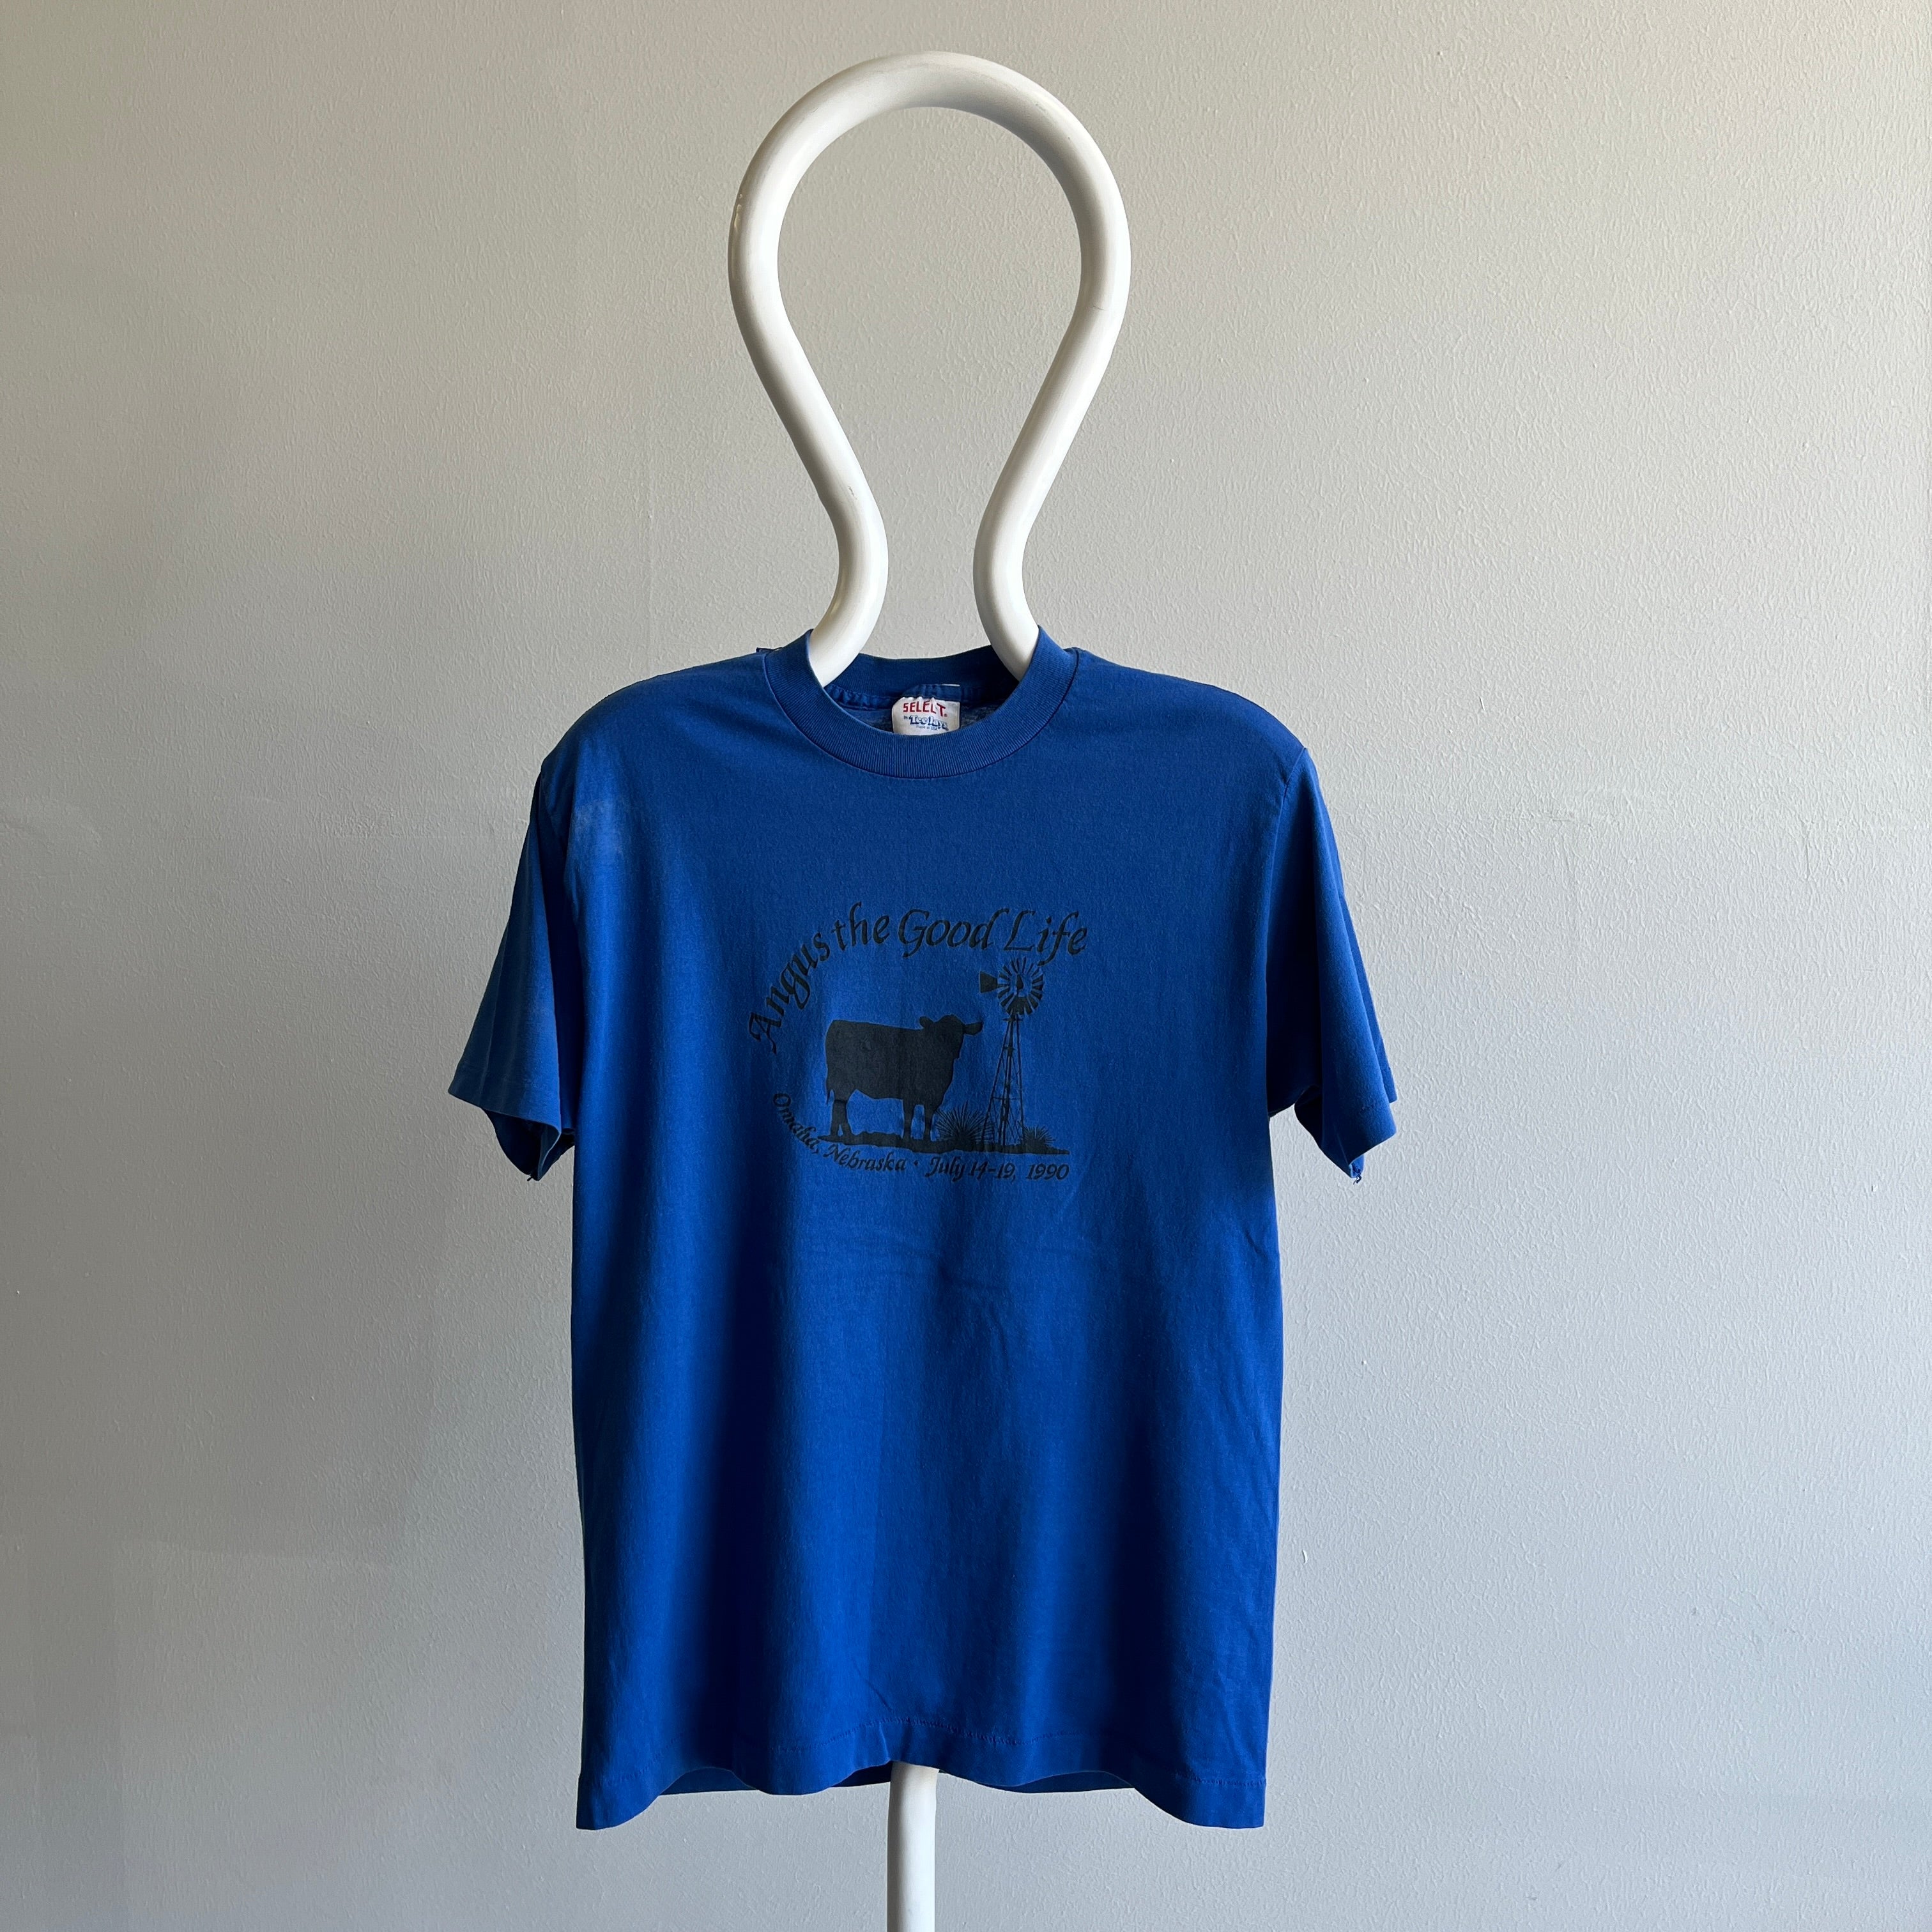 1990 Angus, The Good Life, Omaha Nebraska Cow T-Shirt